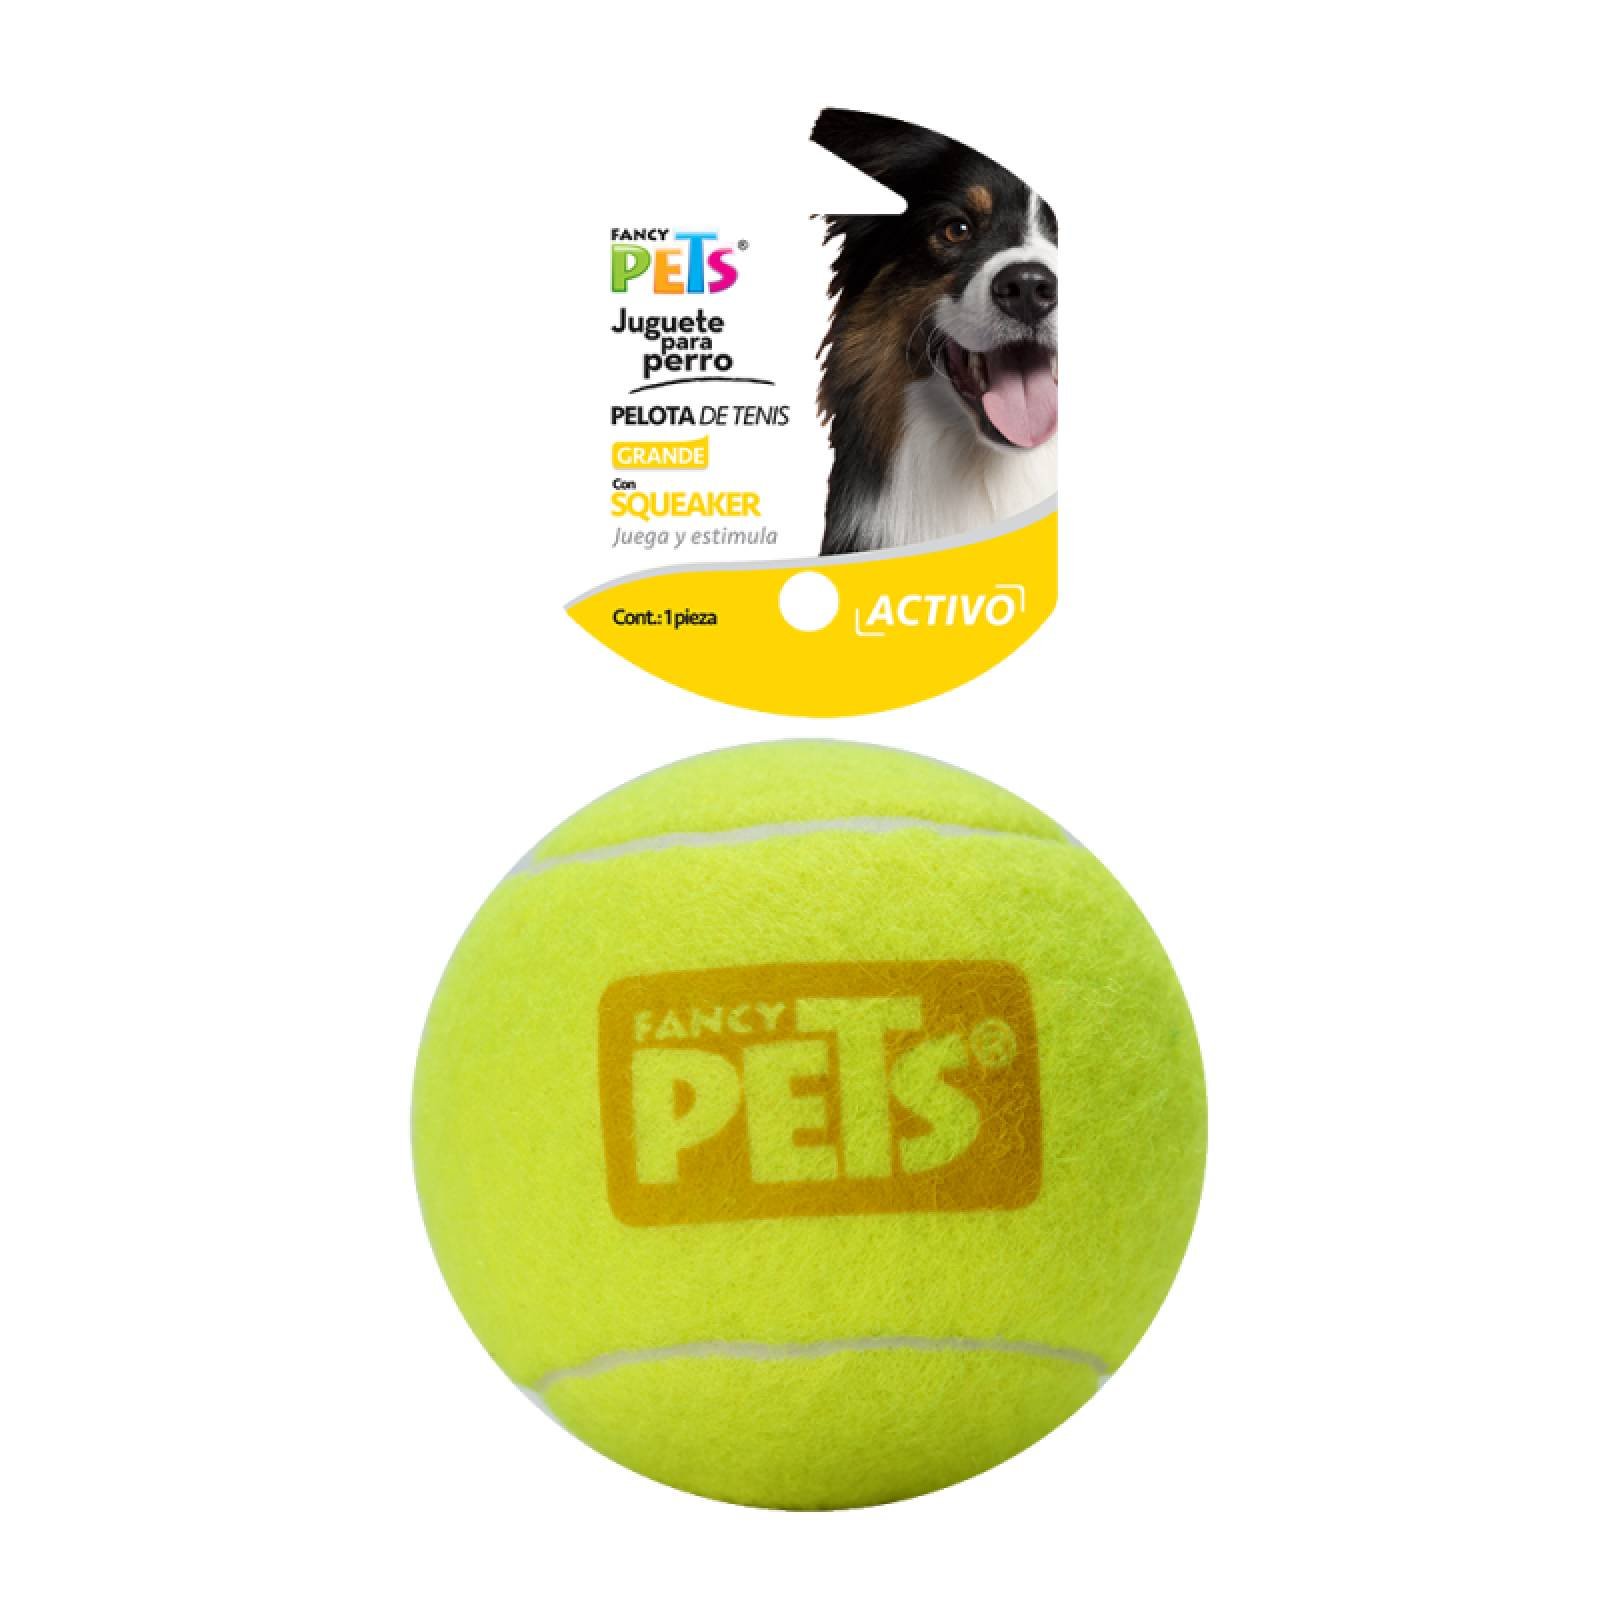 Pelota Grande Tenis Sonido Squeaker Juguete Perro Fancy Pets